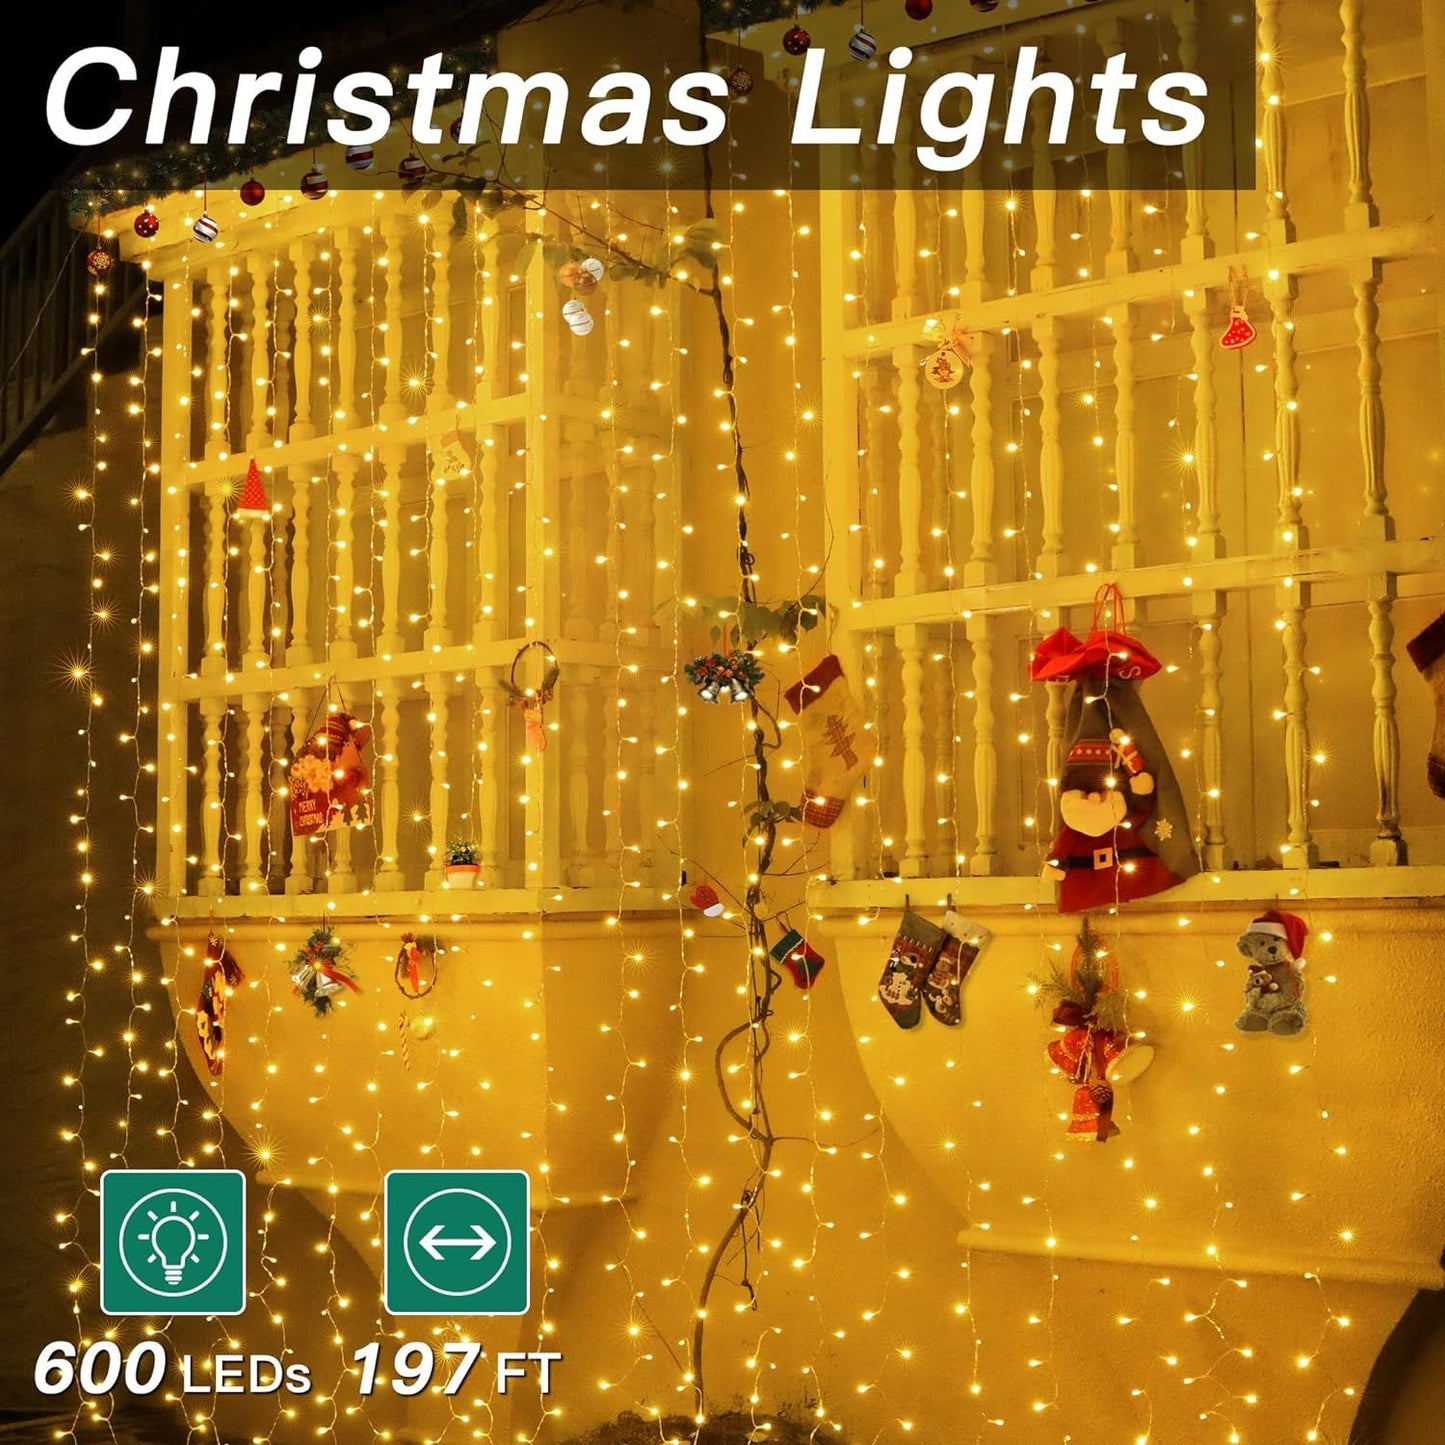 ShineShine 600 Warm White LED Christmas String Lights With Remote & Timer